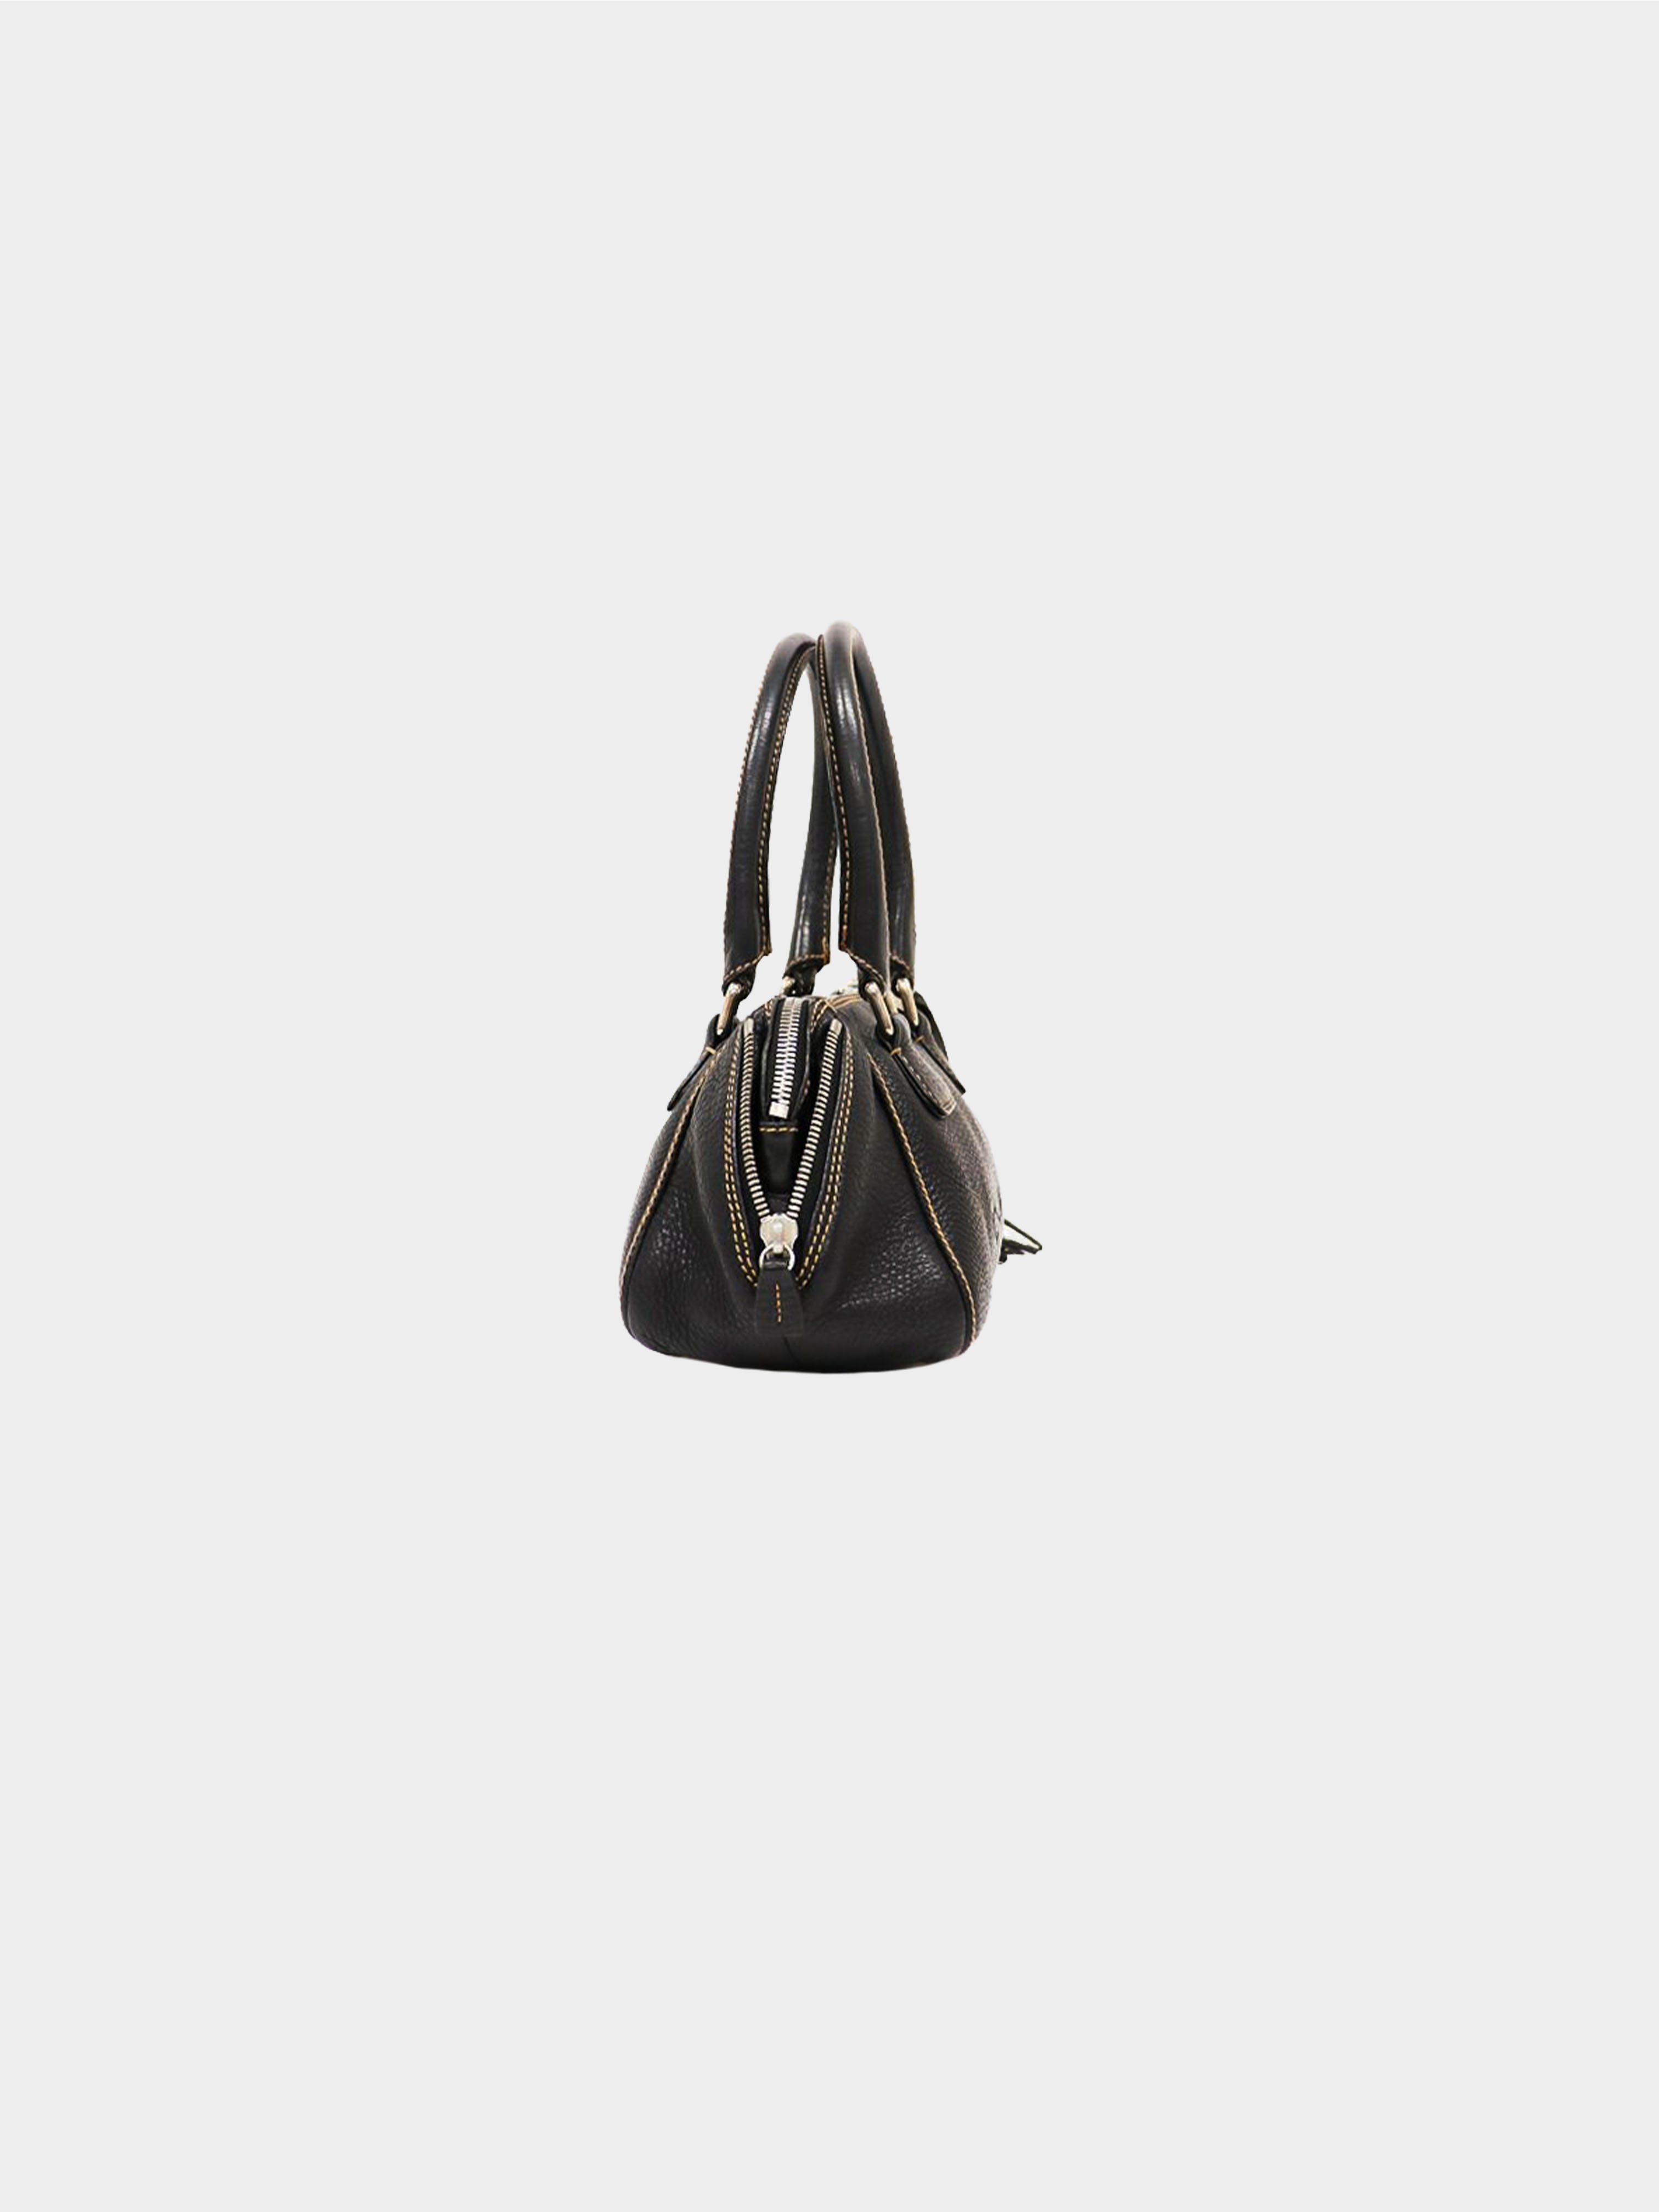 Chanel 2003 Black Caviar Leather Lax Tassel Bag · INTO